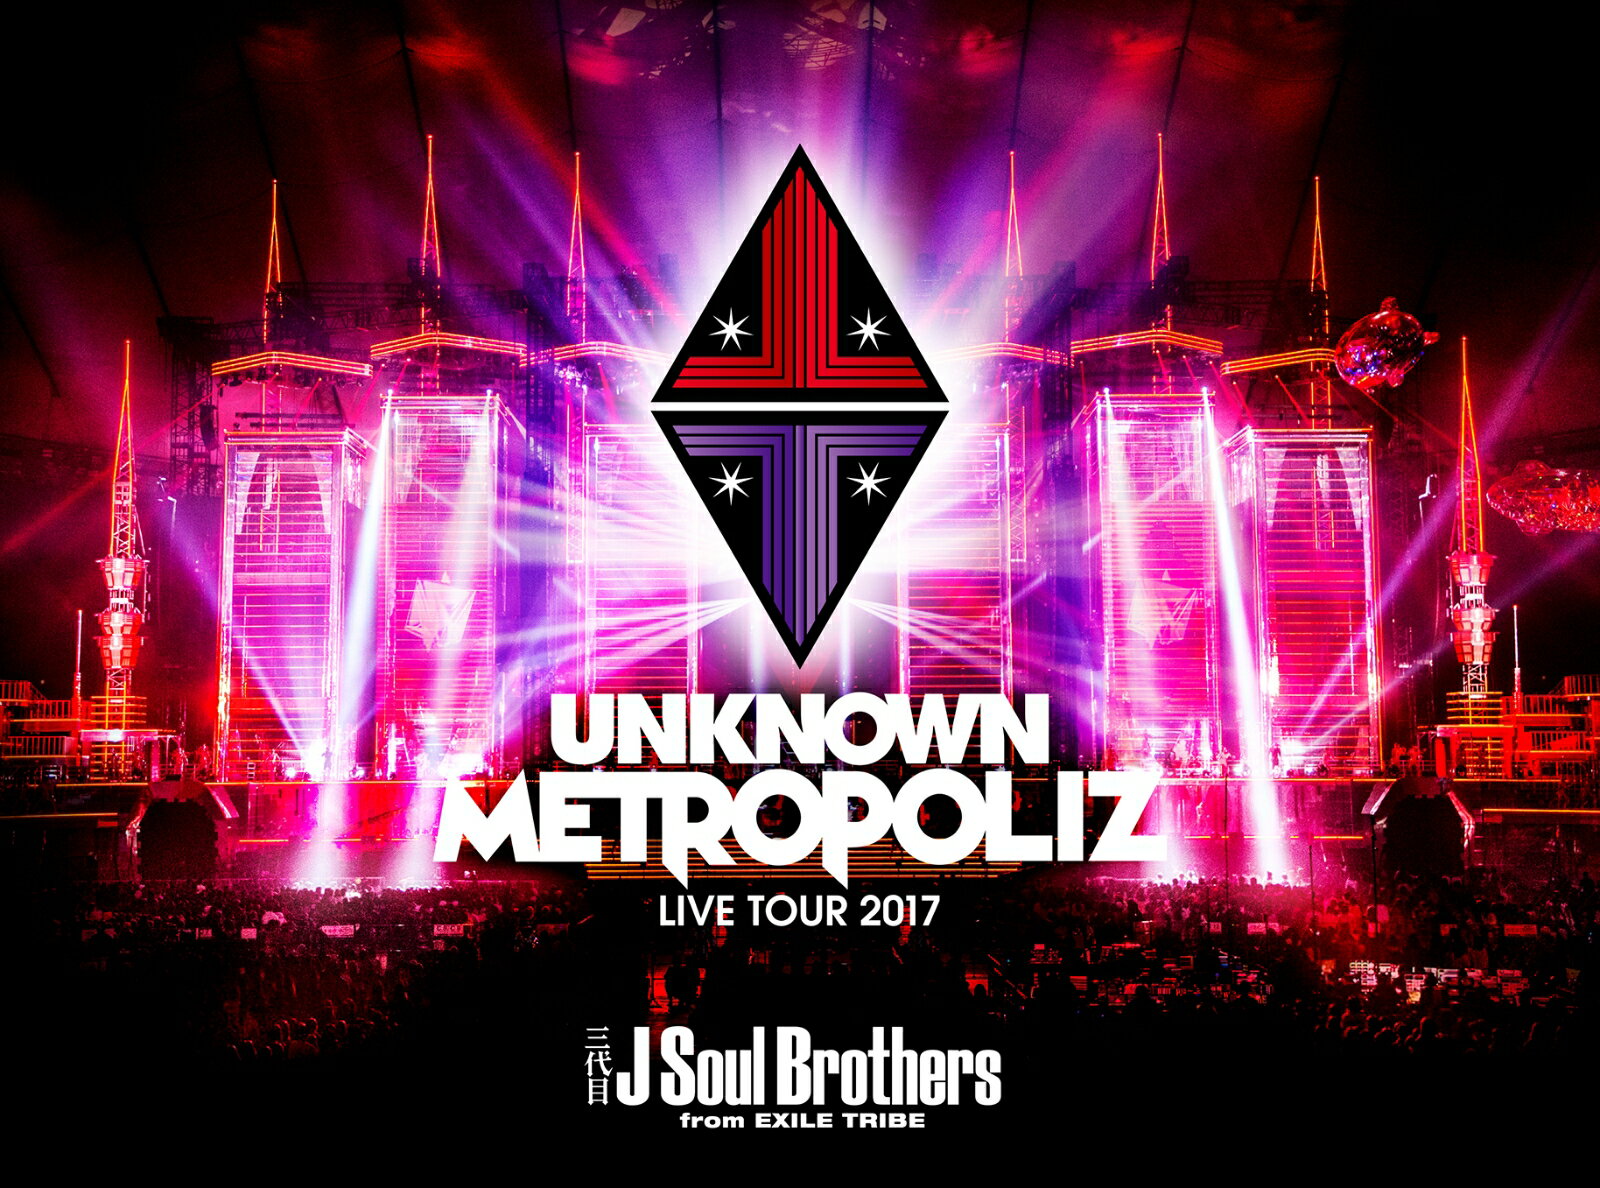 三代目 J Soul Brothers LIVE TOUR 2017 “UNKNOWN METROPOLIZ”